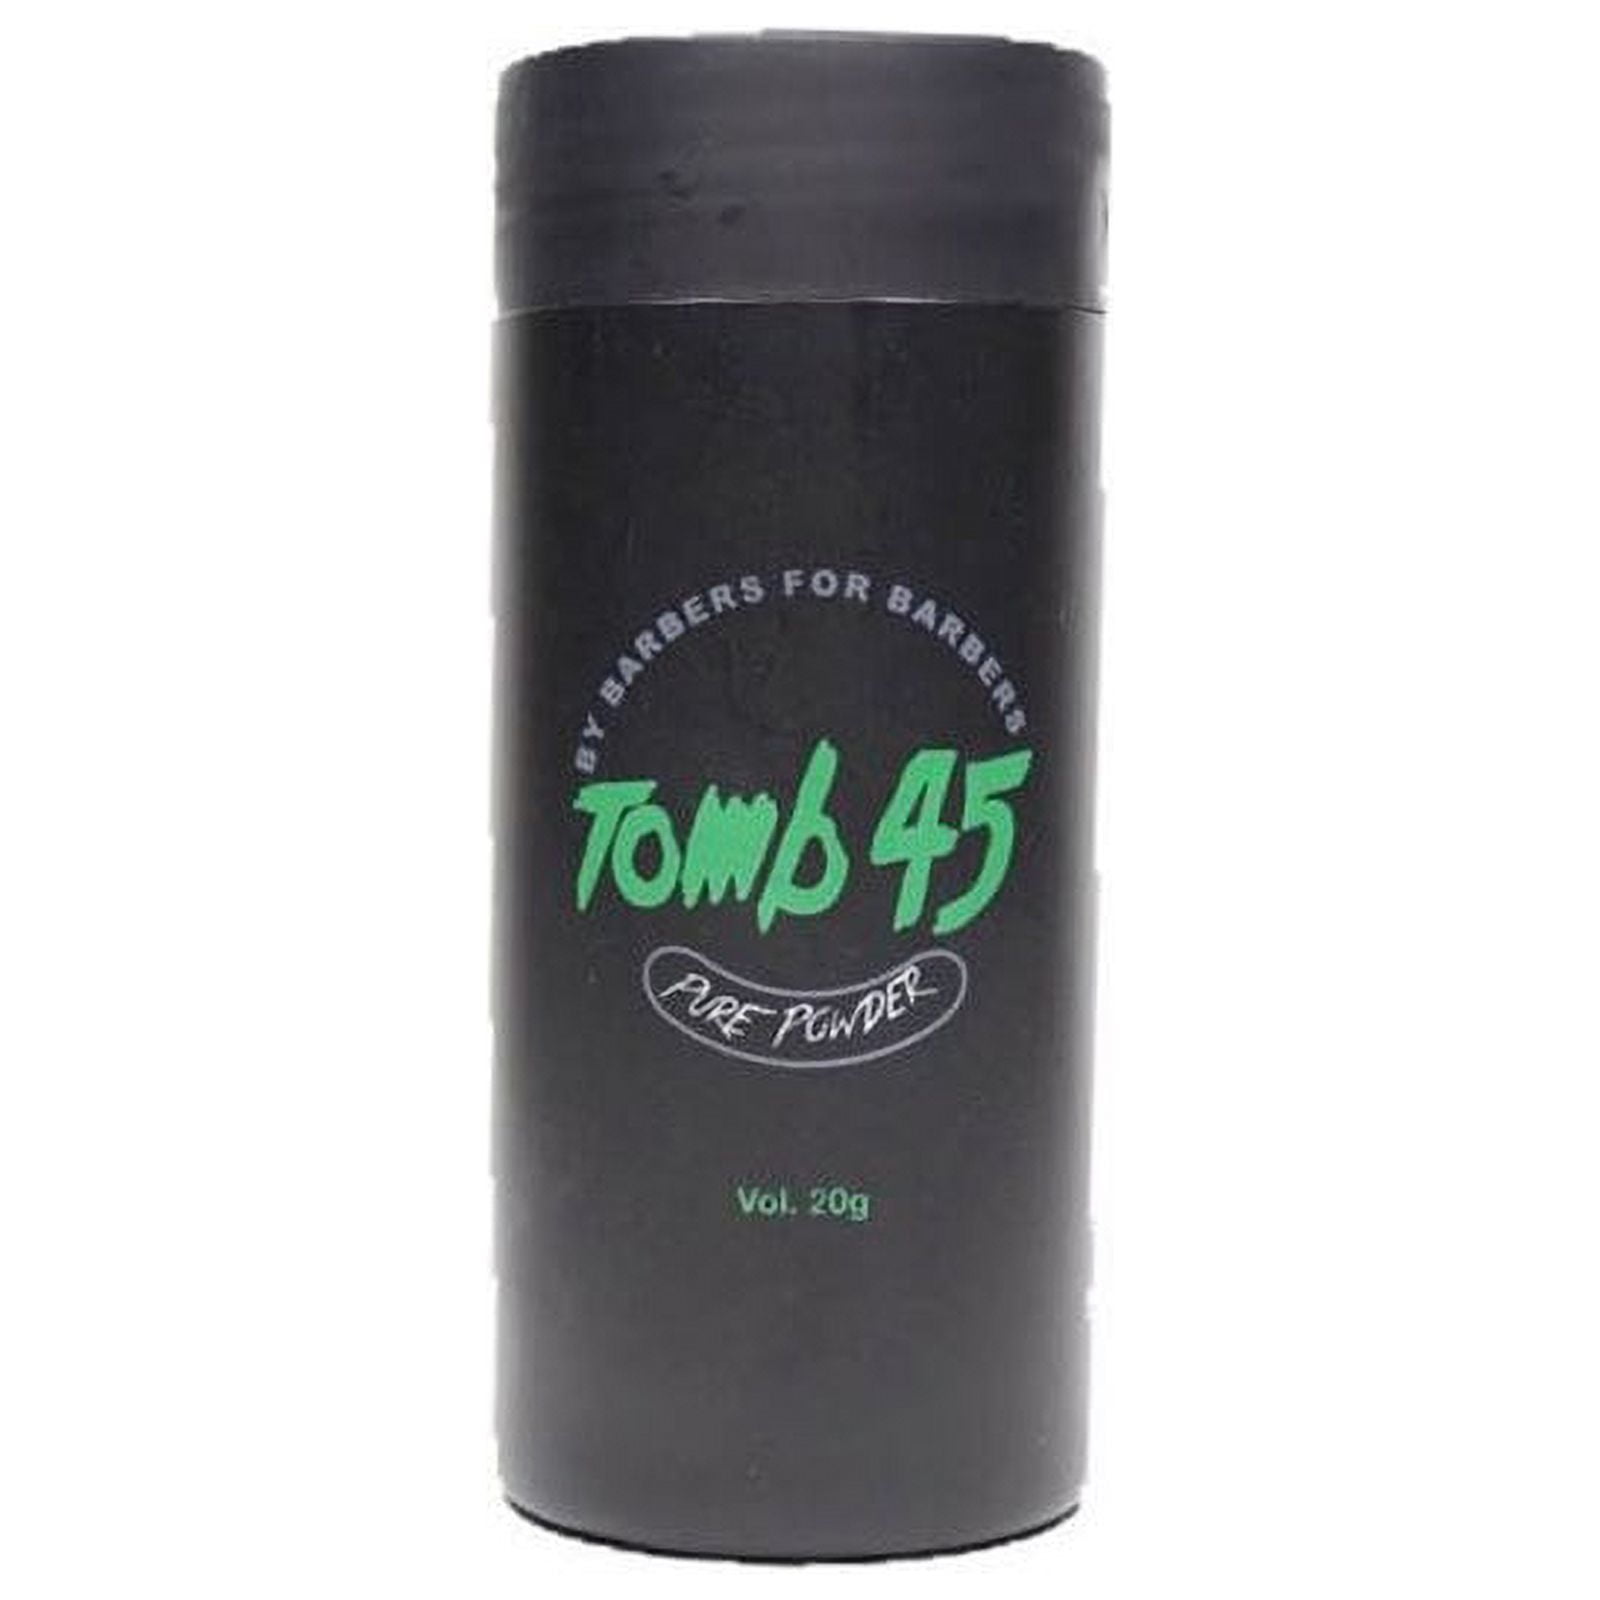 Tomb45 Pure Powder 20g